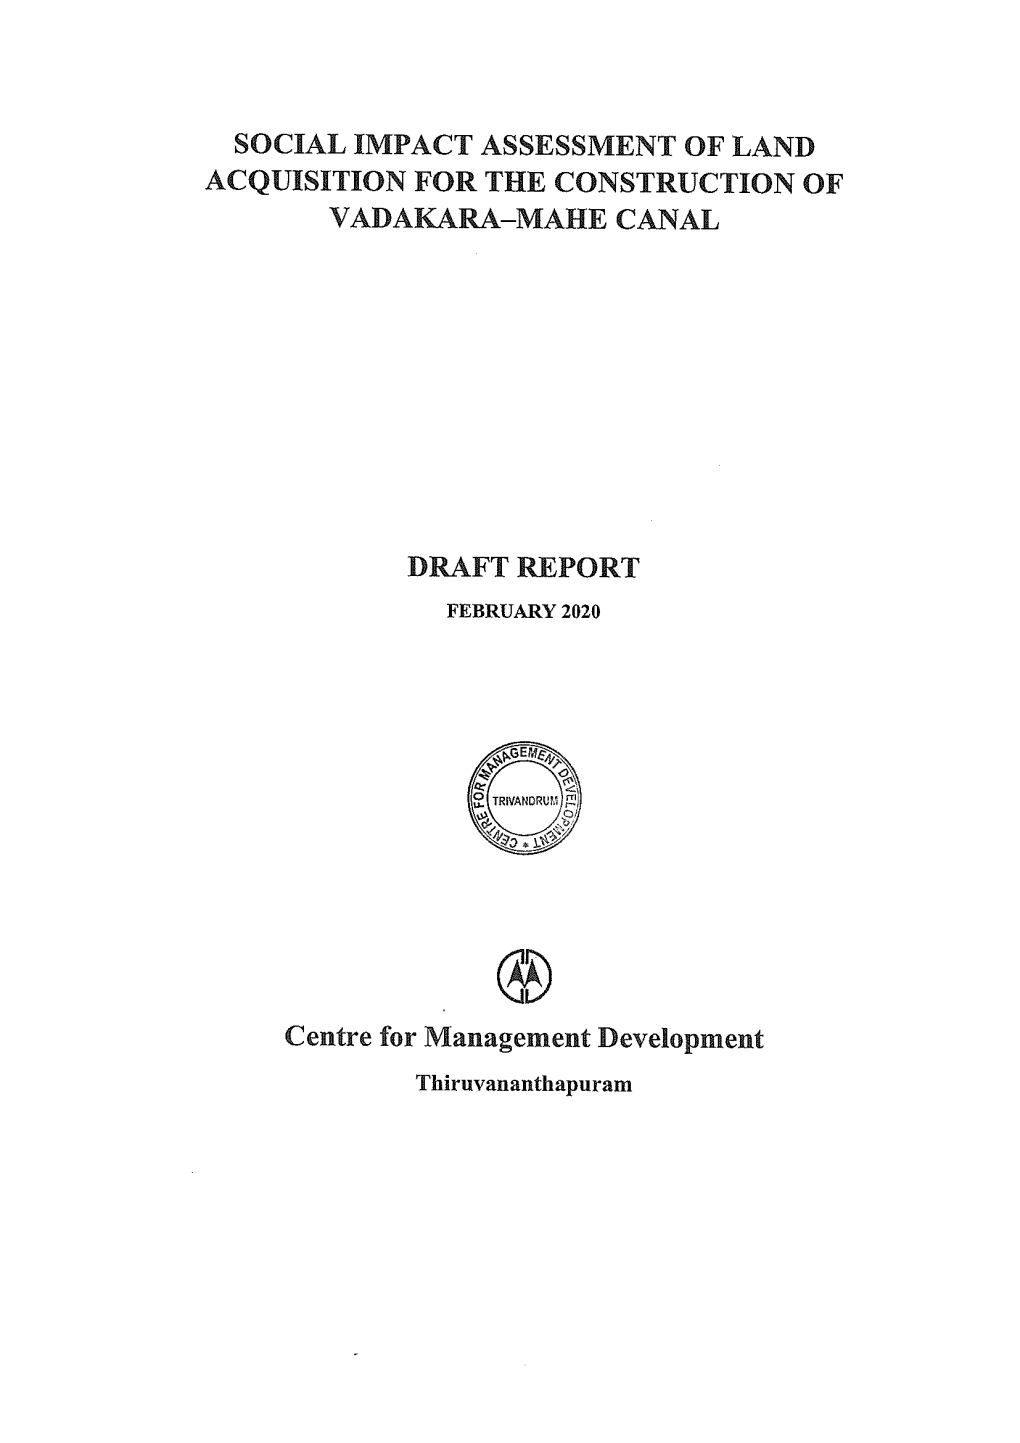 SIA-Vadakara-Mahe Canal-Draft Report-English.Pdf